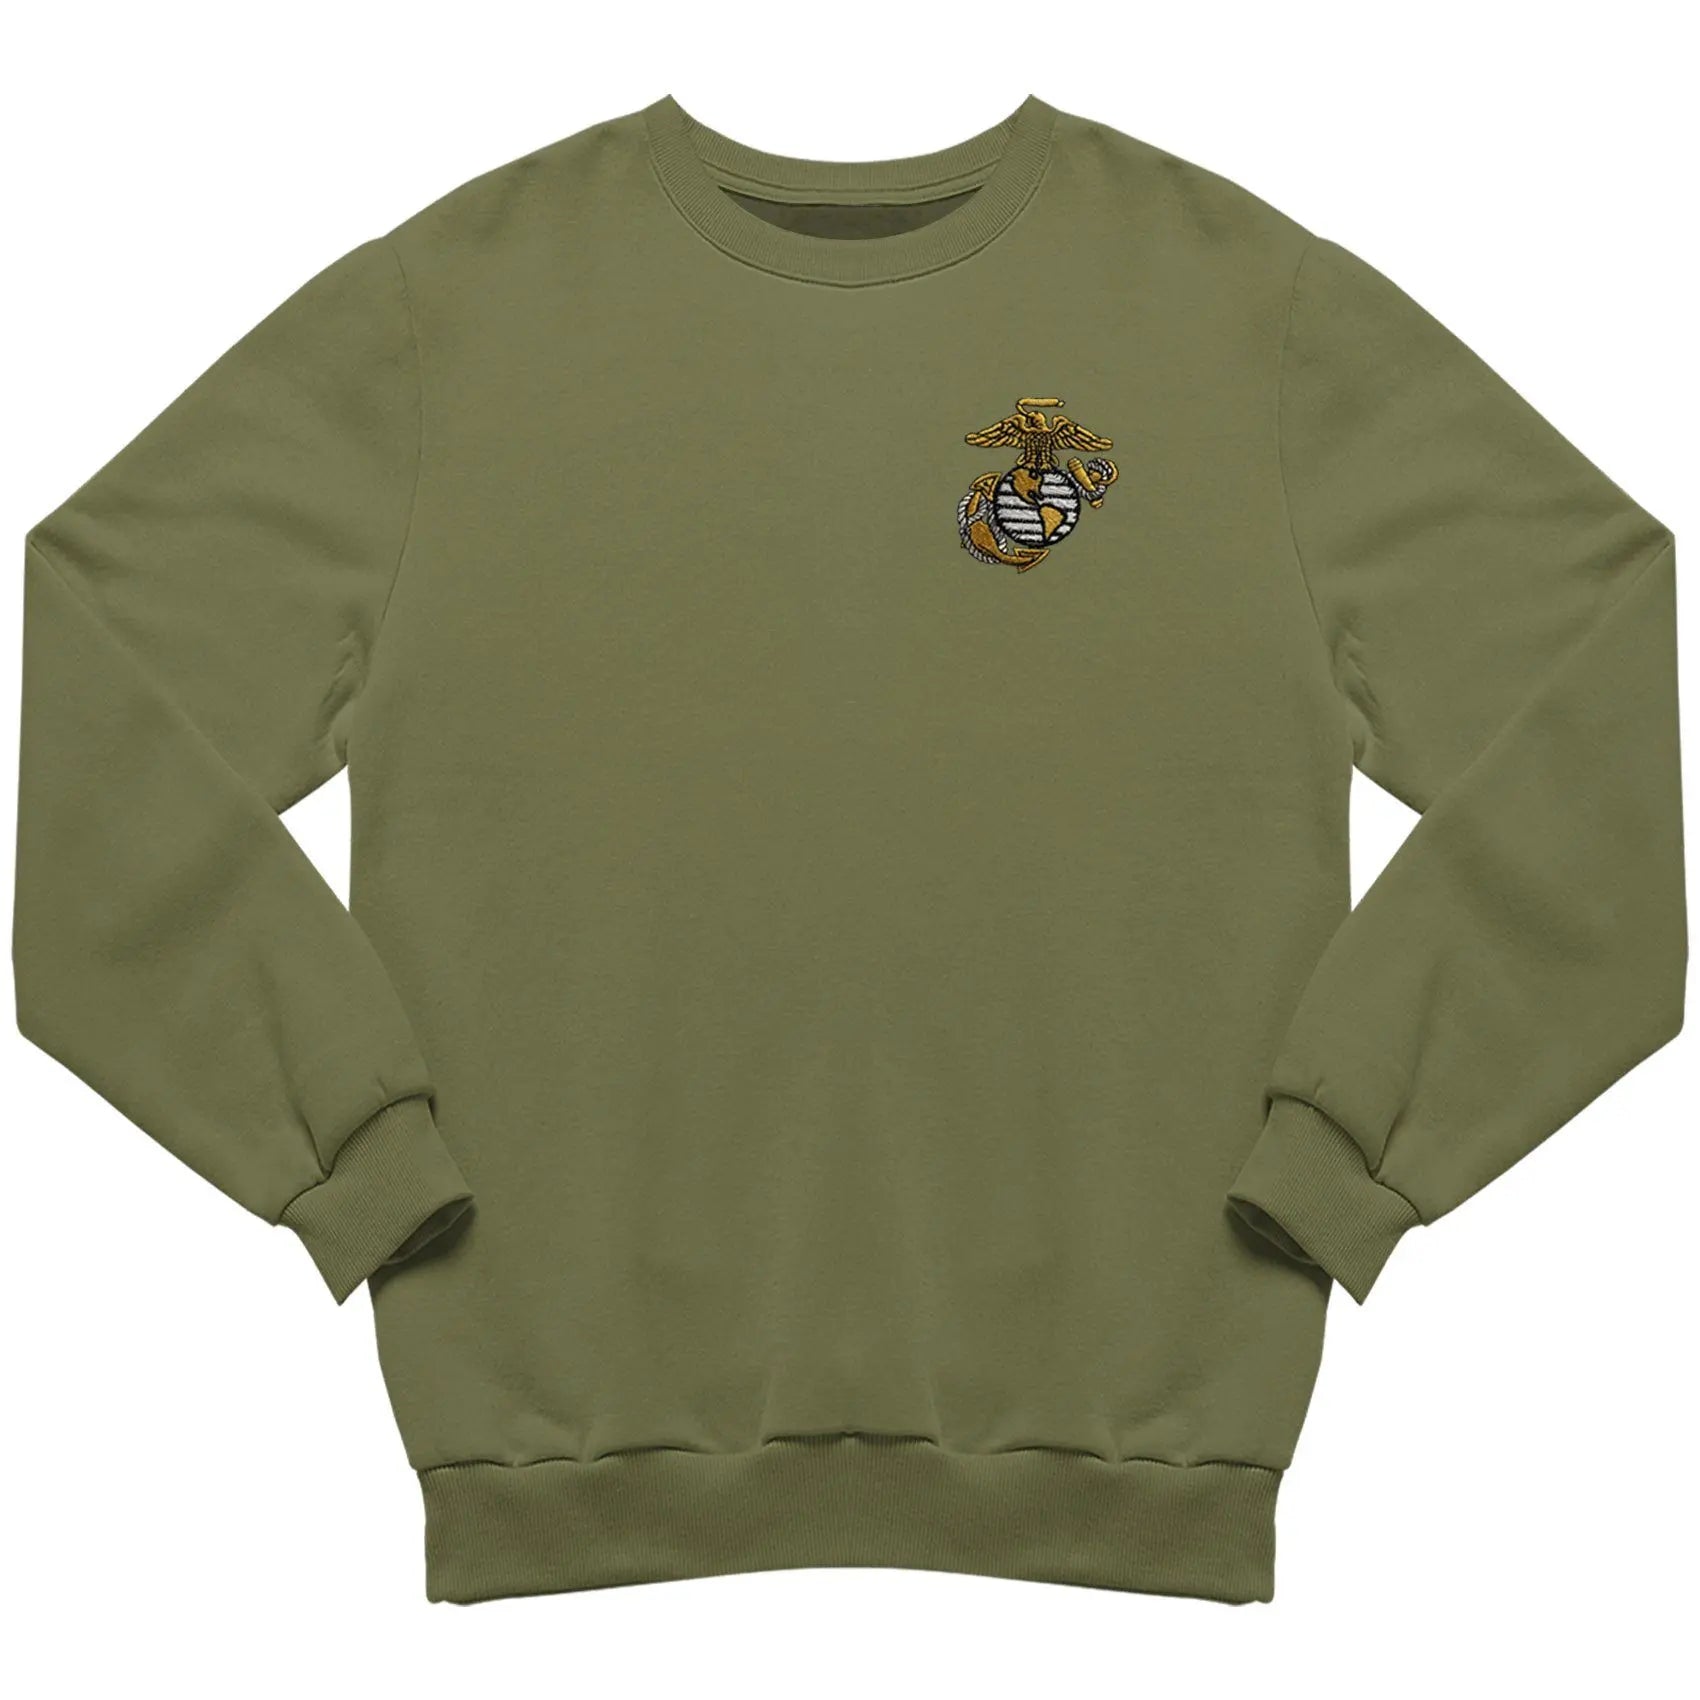 Big EGA Embroidered Sweatshirt - Marine Corps Direct